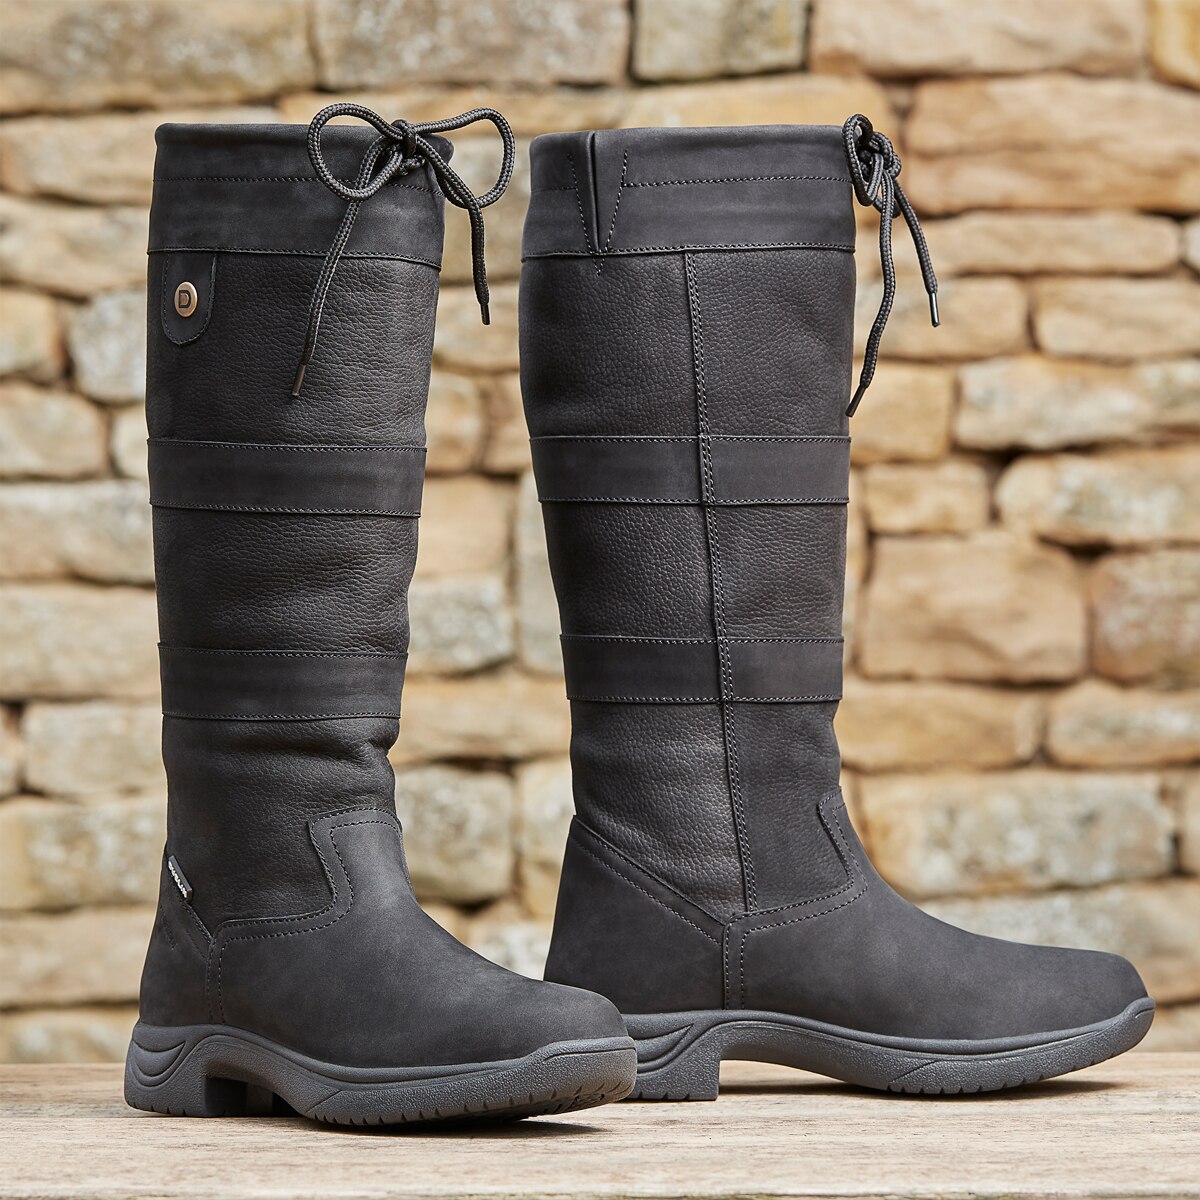 Dublin Ladies Mid-Calf River Boots Tan Size 6.5 